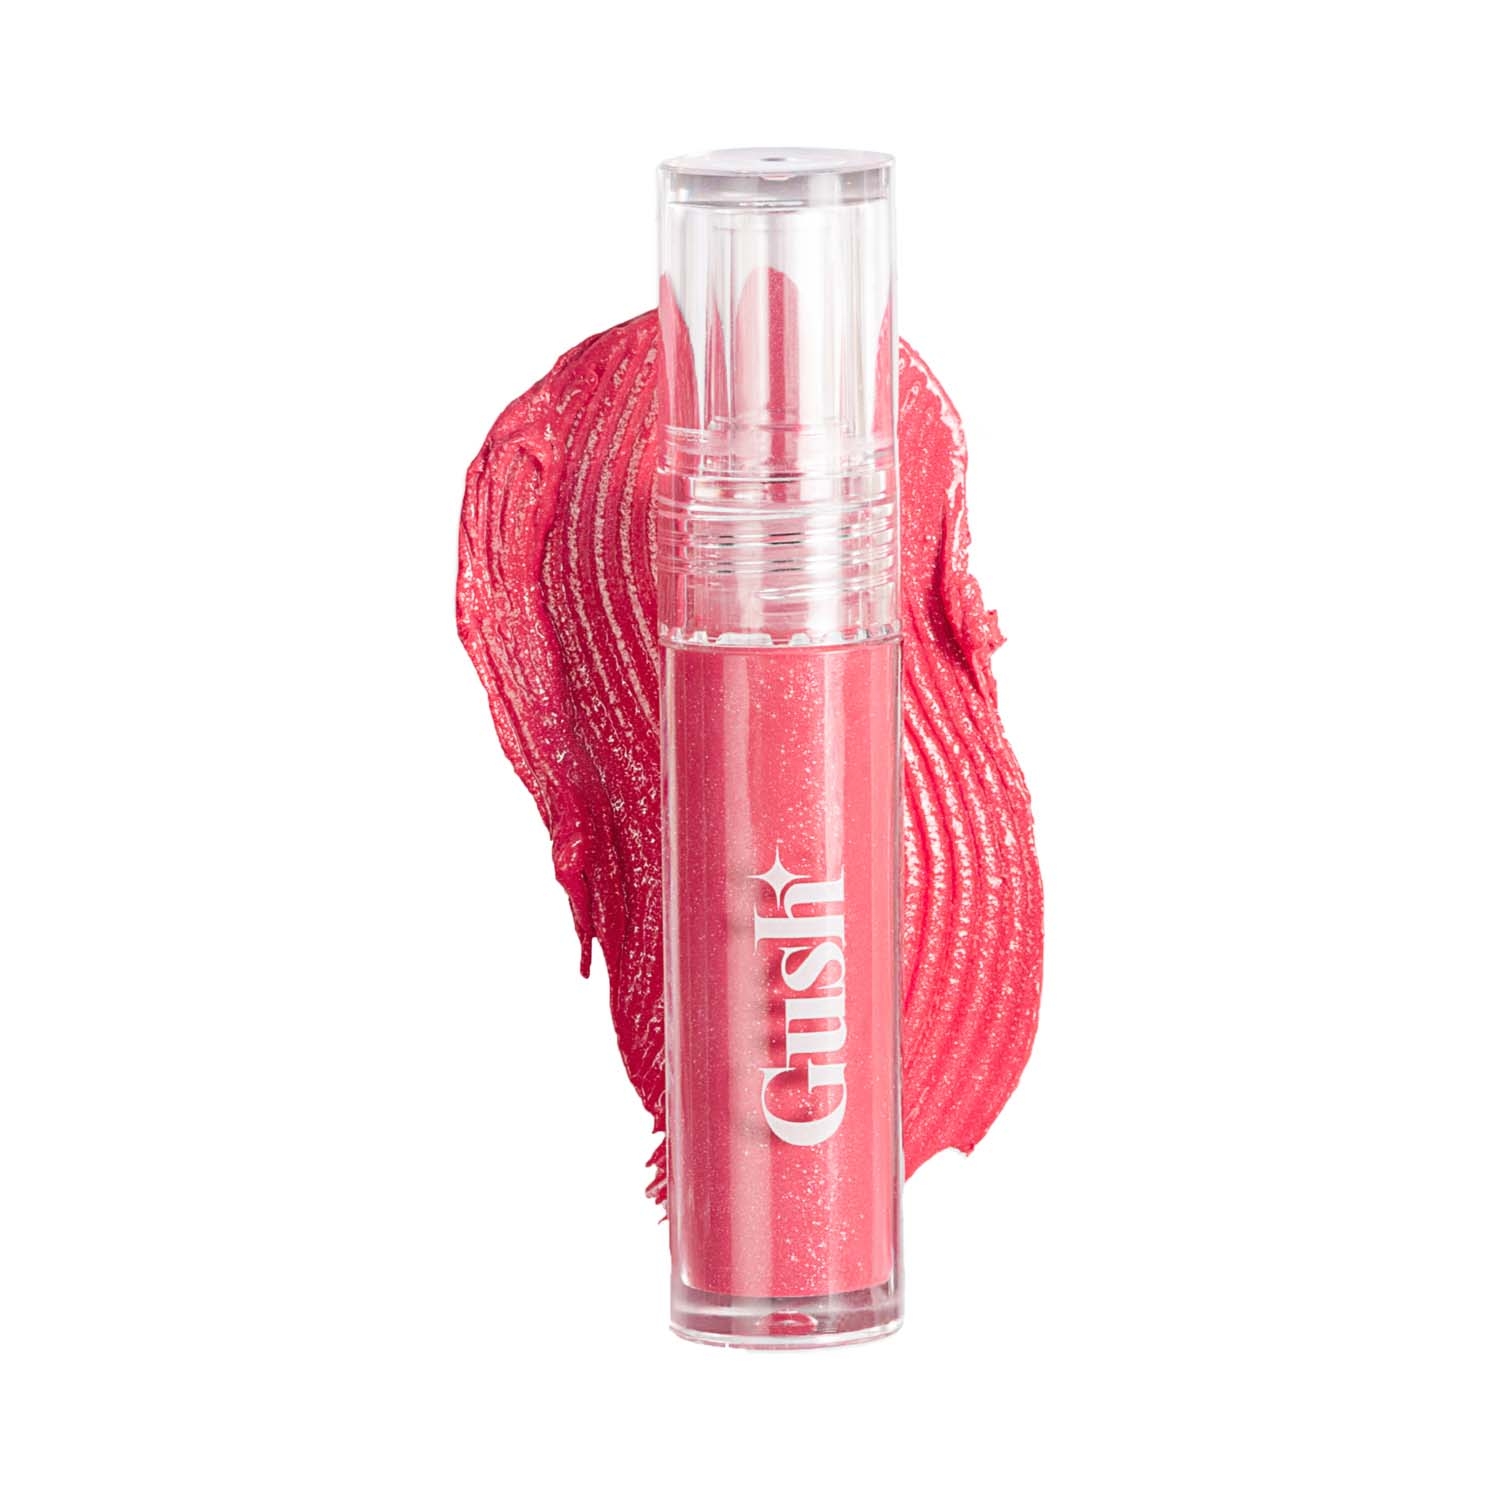 Gush Beauty | Gush Beauty Glaze Lip Oil Gloss High Shine & Hydrating Lip Gloss - Candy Glaze (2.8ml)